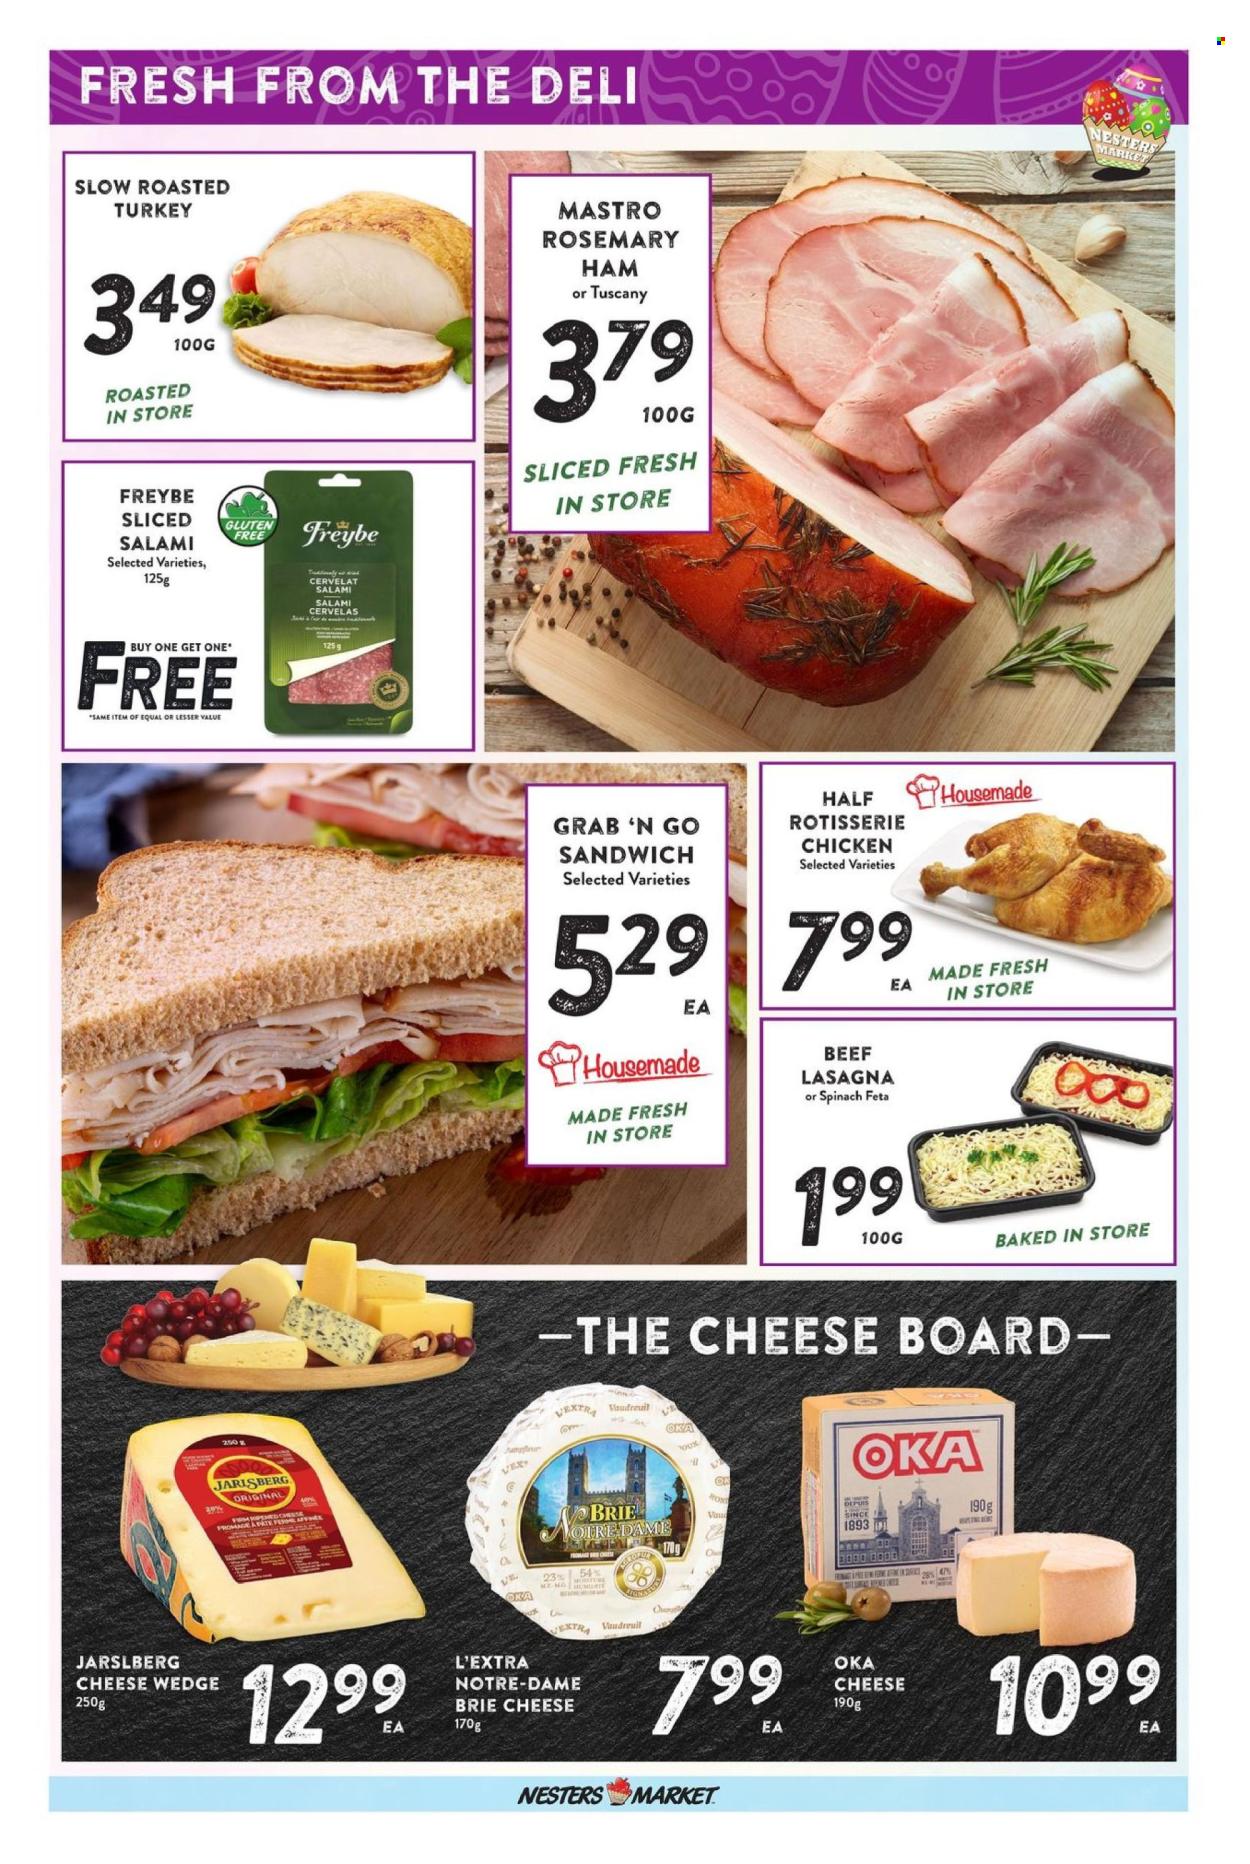 Nesters Food Market flyer  - March 28, 2024 - April 03, 2024.